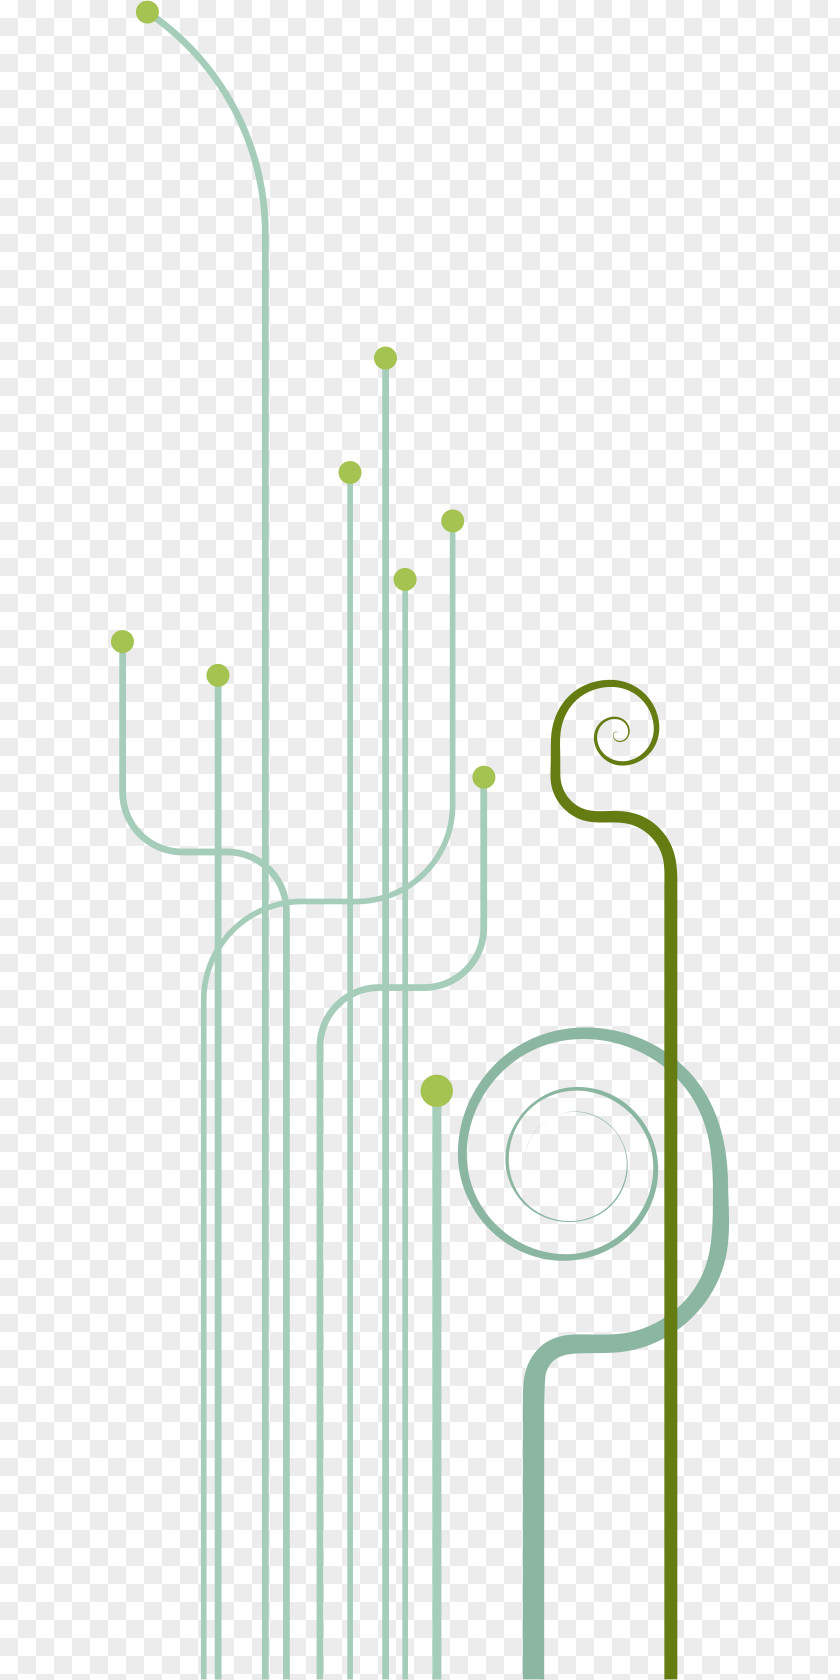 Line Shading Adobe Illustrator PNG